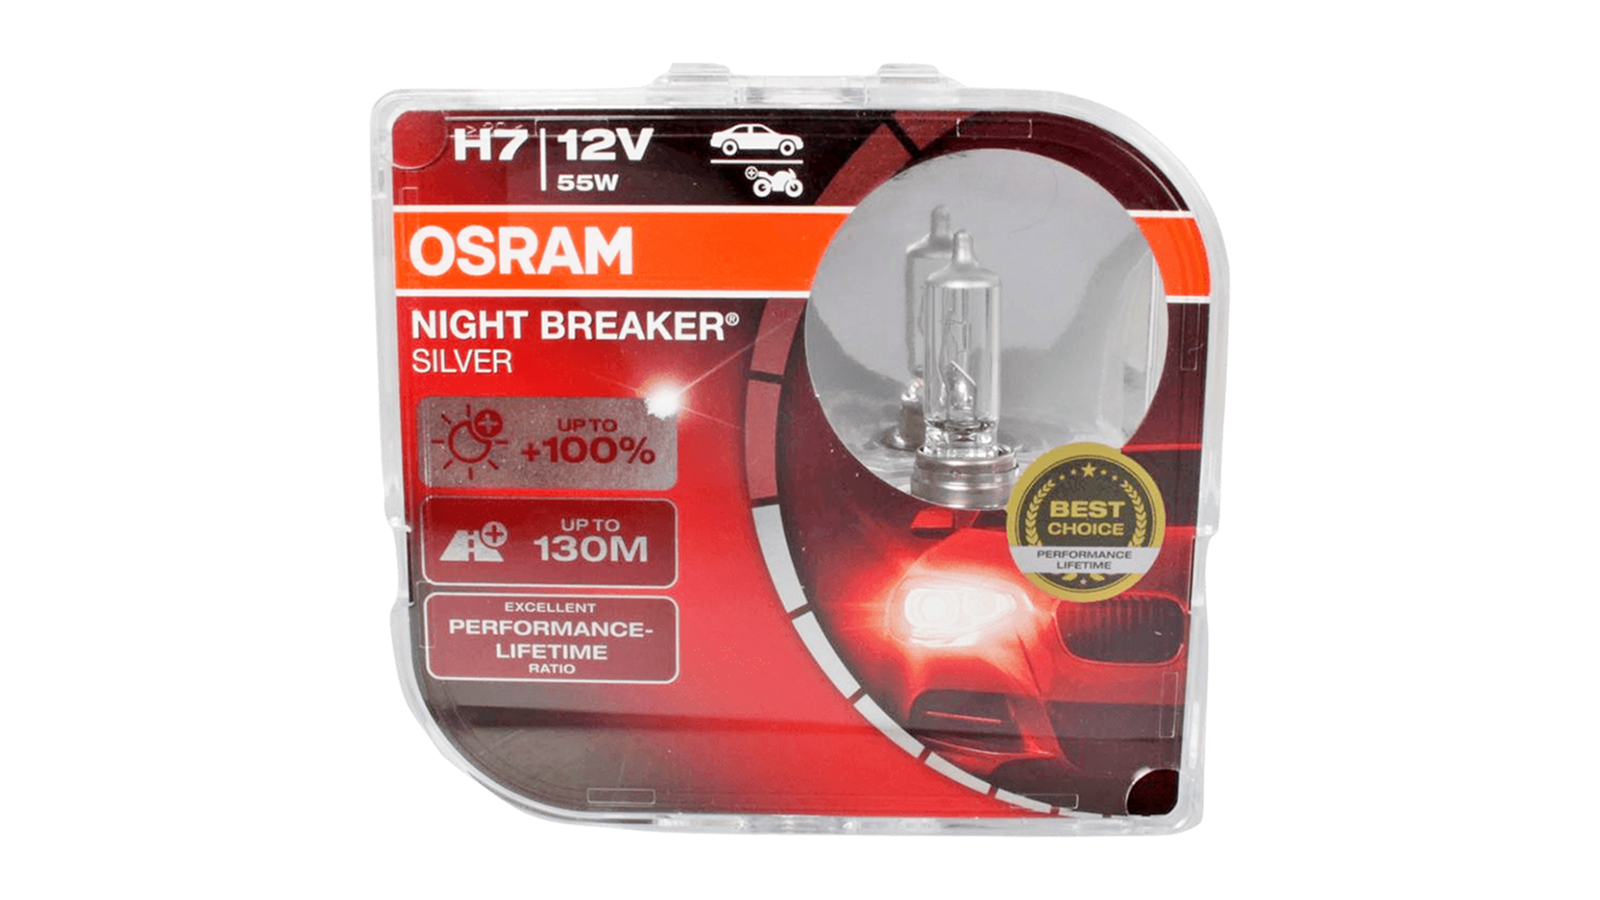 Лампа 12Vx55W H7 +100% OSRAM NIGHT BREAKER SILVER 2шт комплект